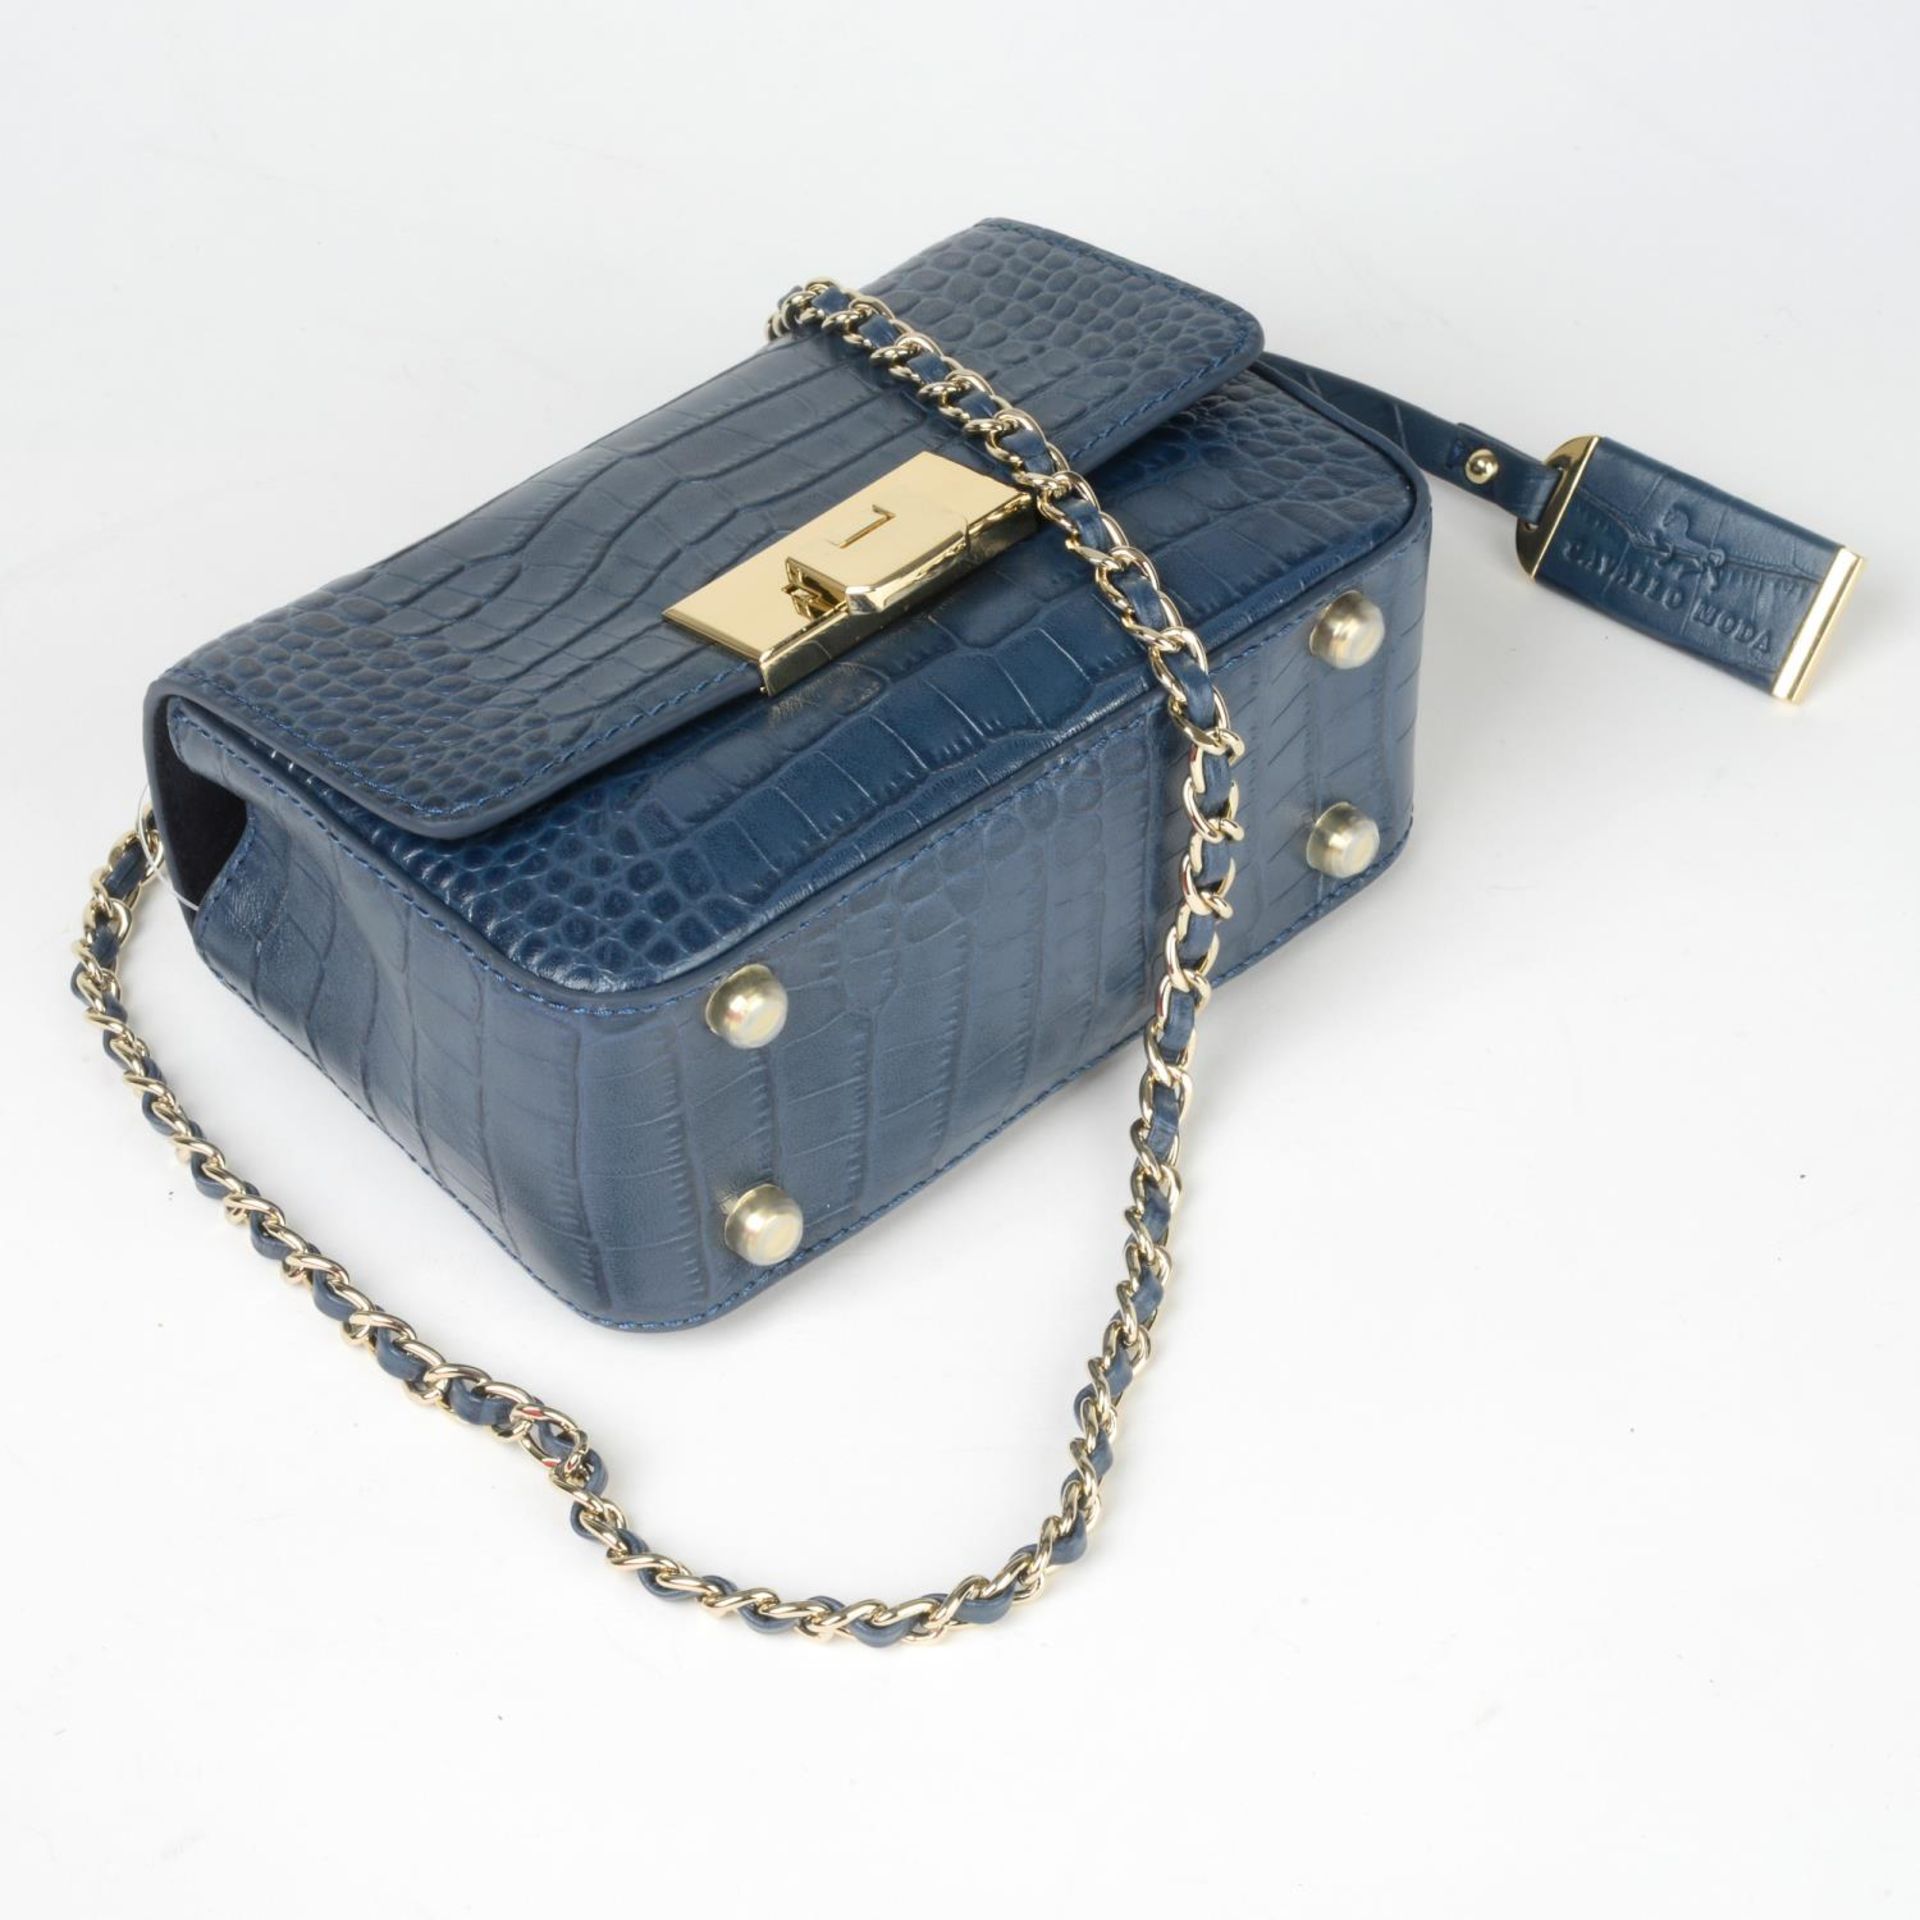 CAVALLO MODA - two leather handbags. - Image 2 of 5